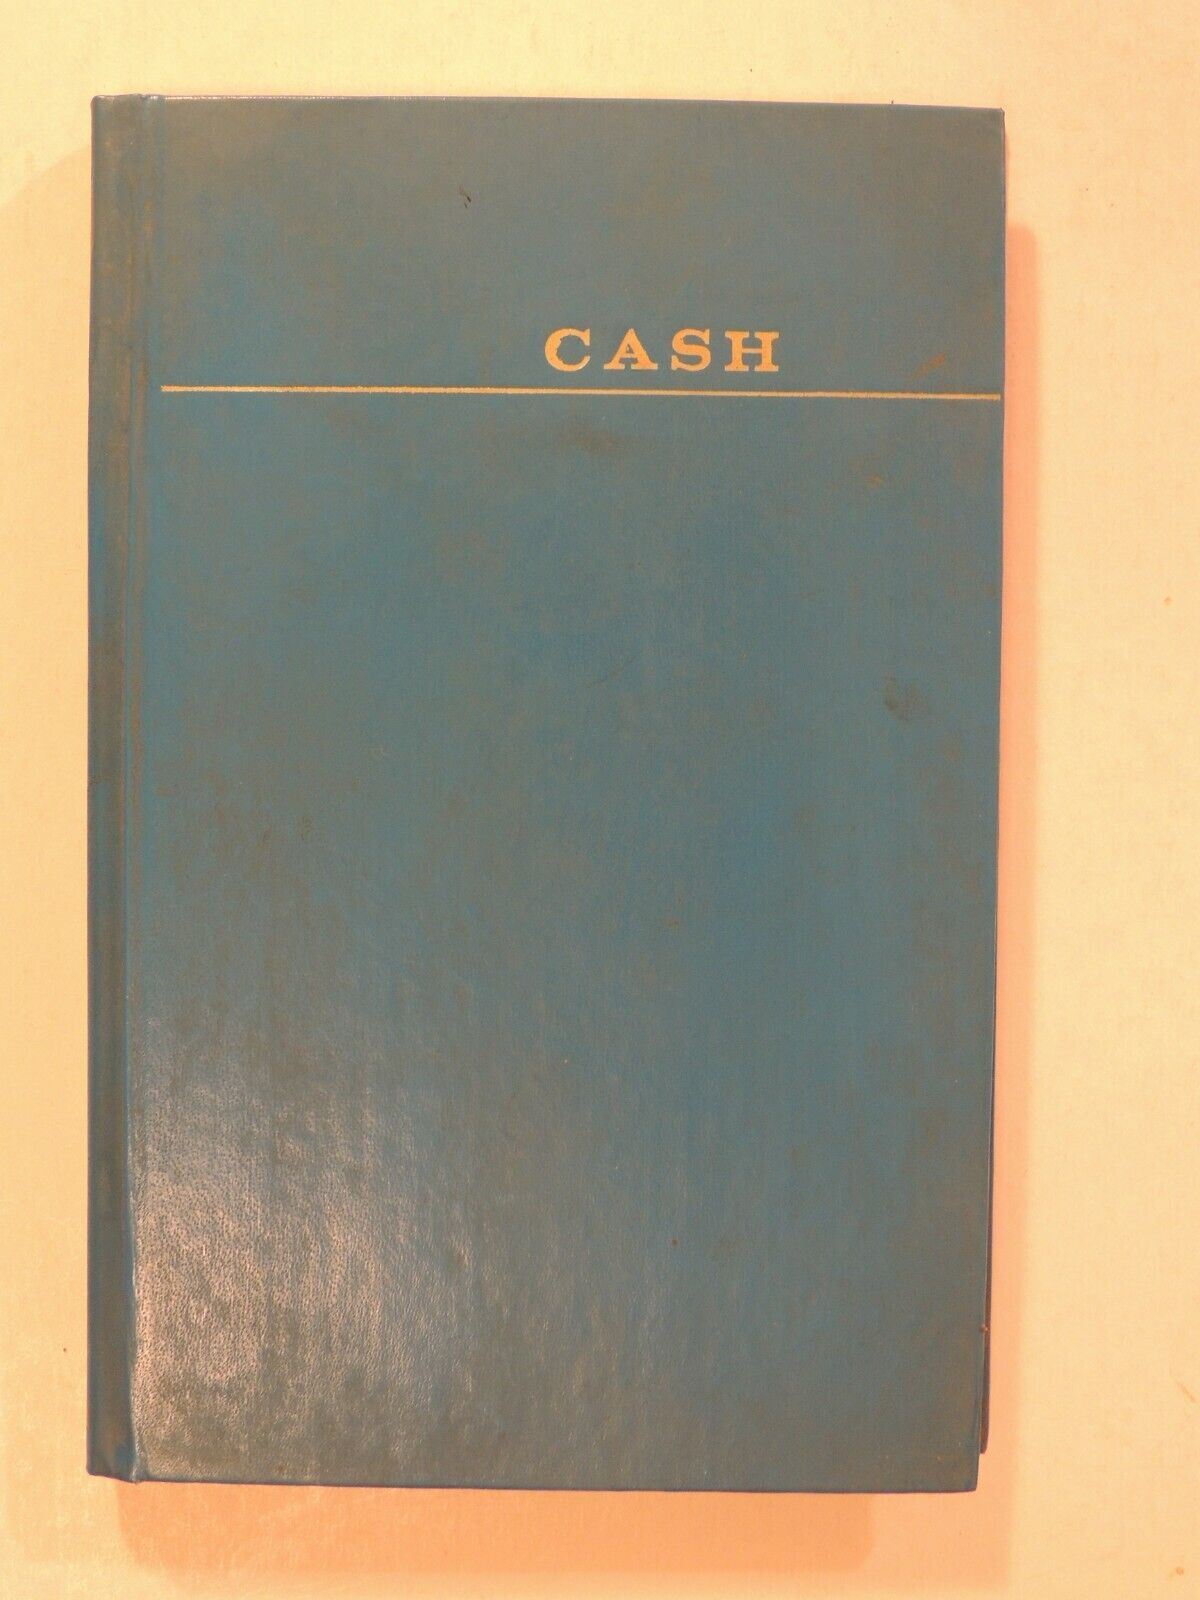 Vintage Cash Ledger Book - Vernon Royal - Blue & 6 Function Calculator